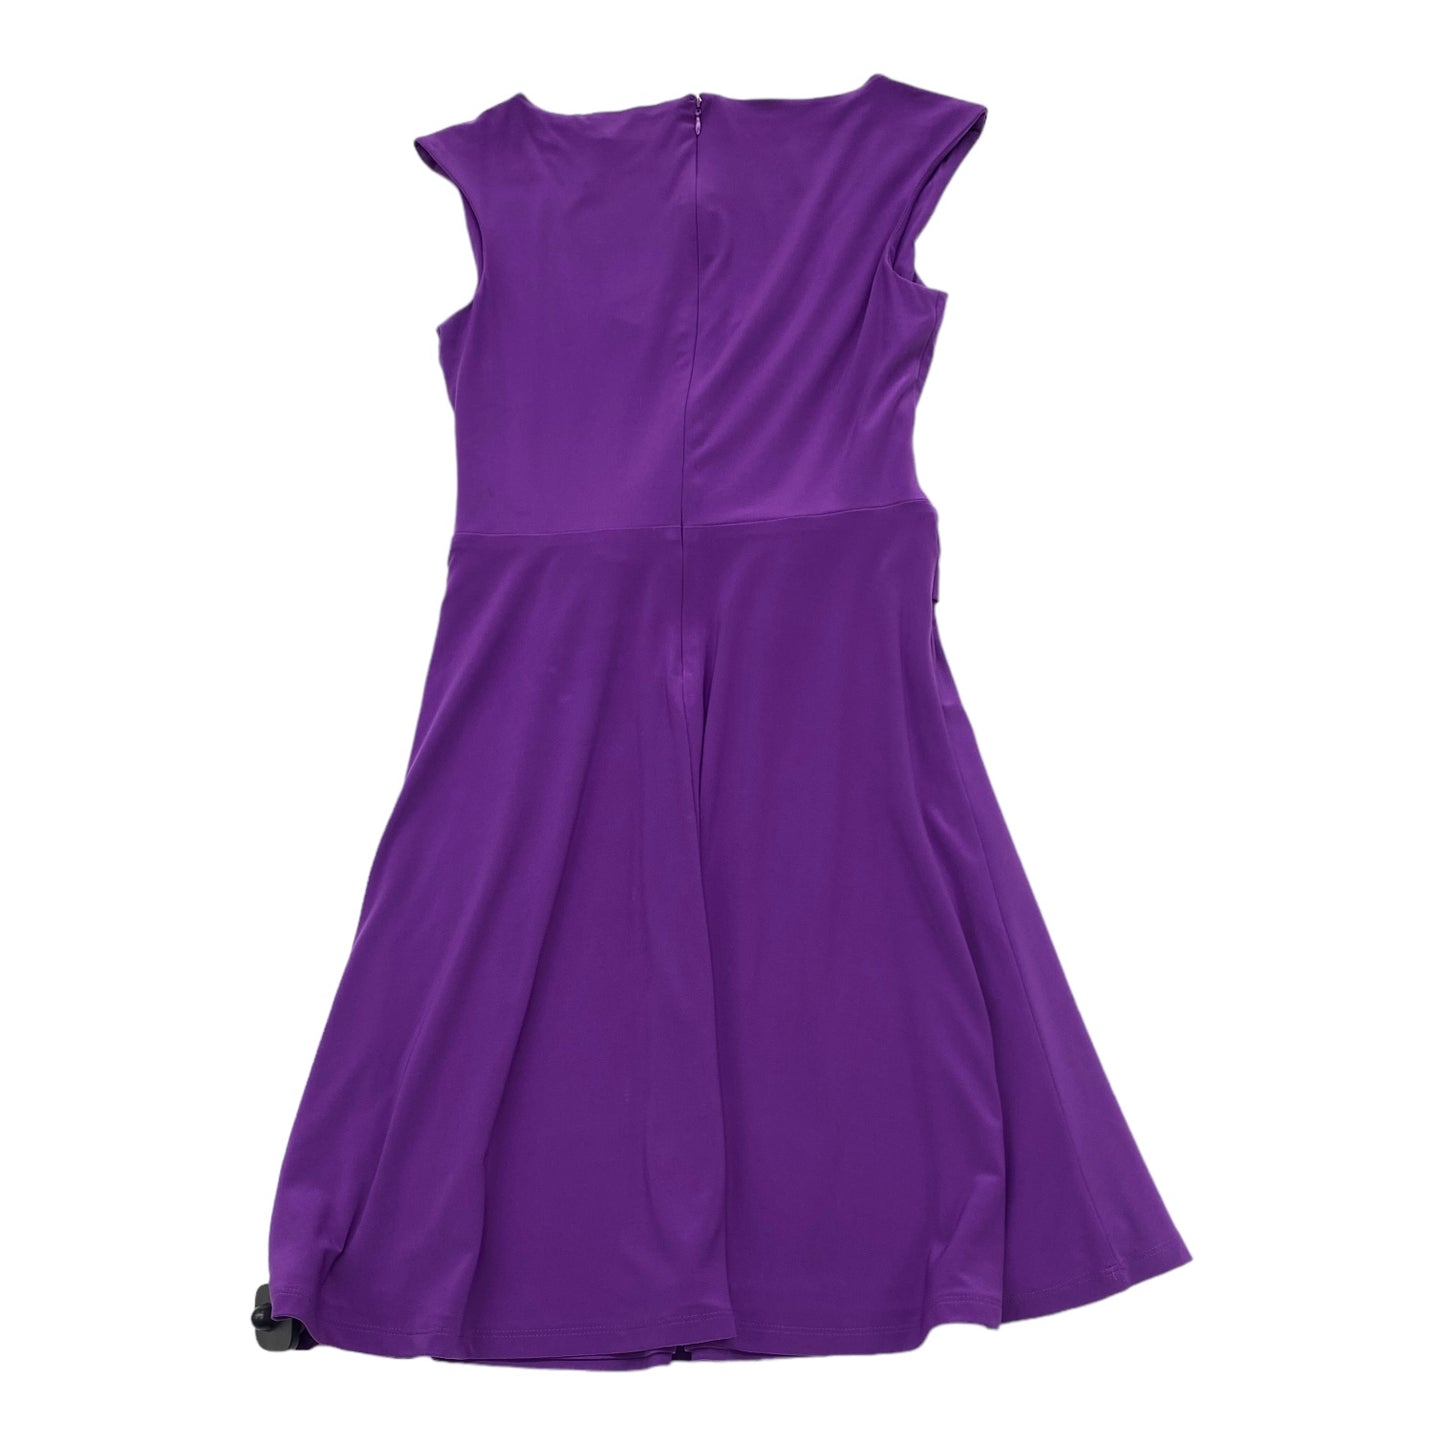 Dress Party Midi By Lauren By Ralph Lauren  Size: 2